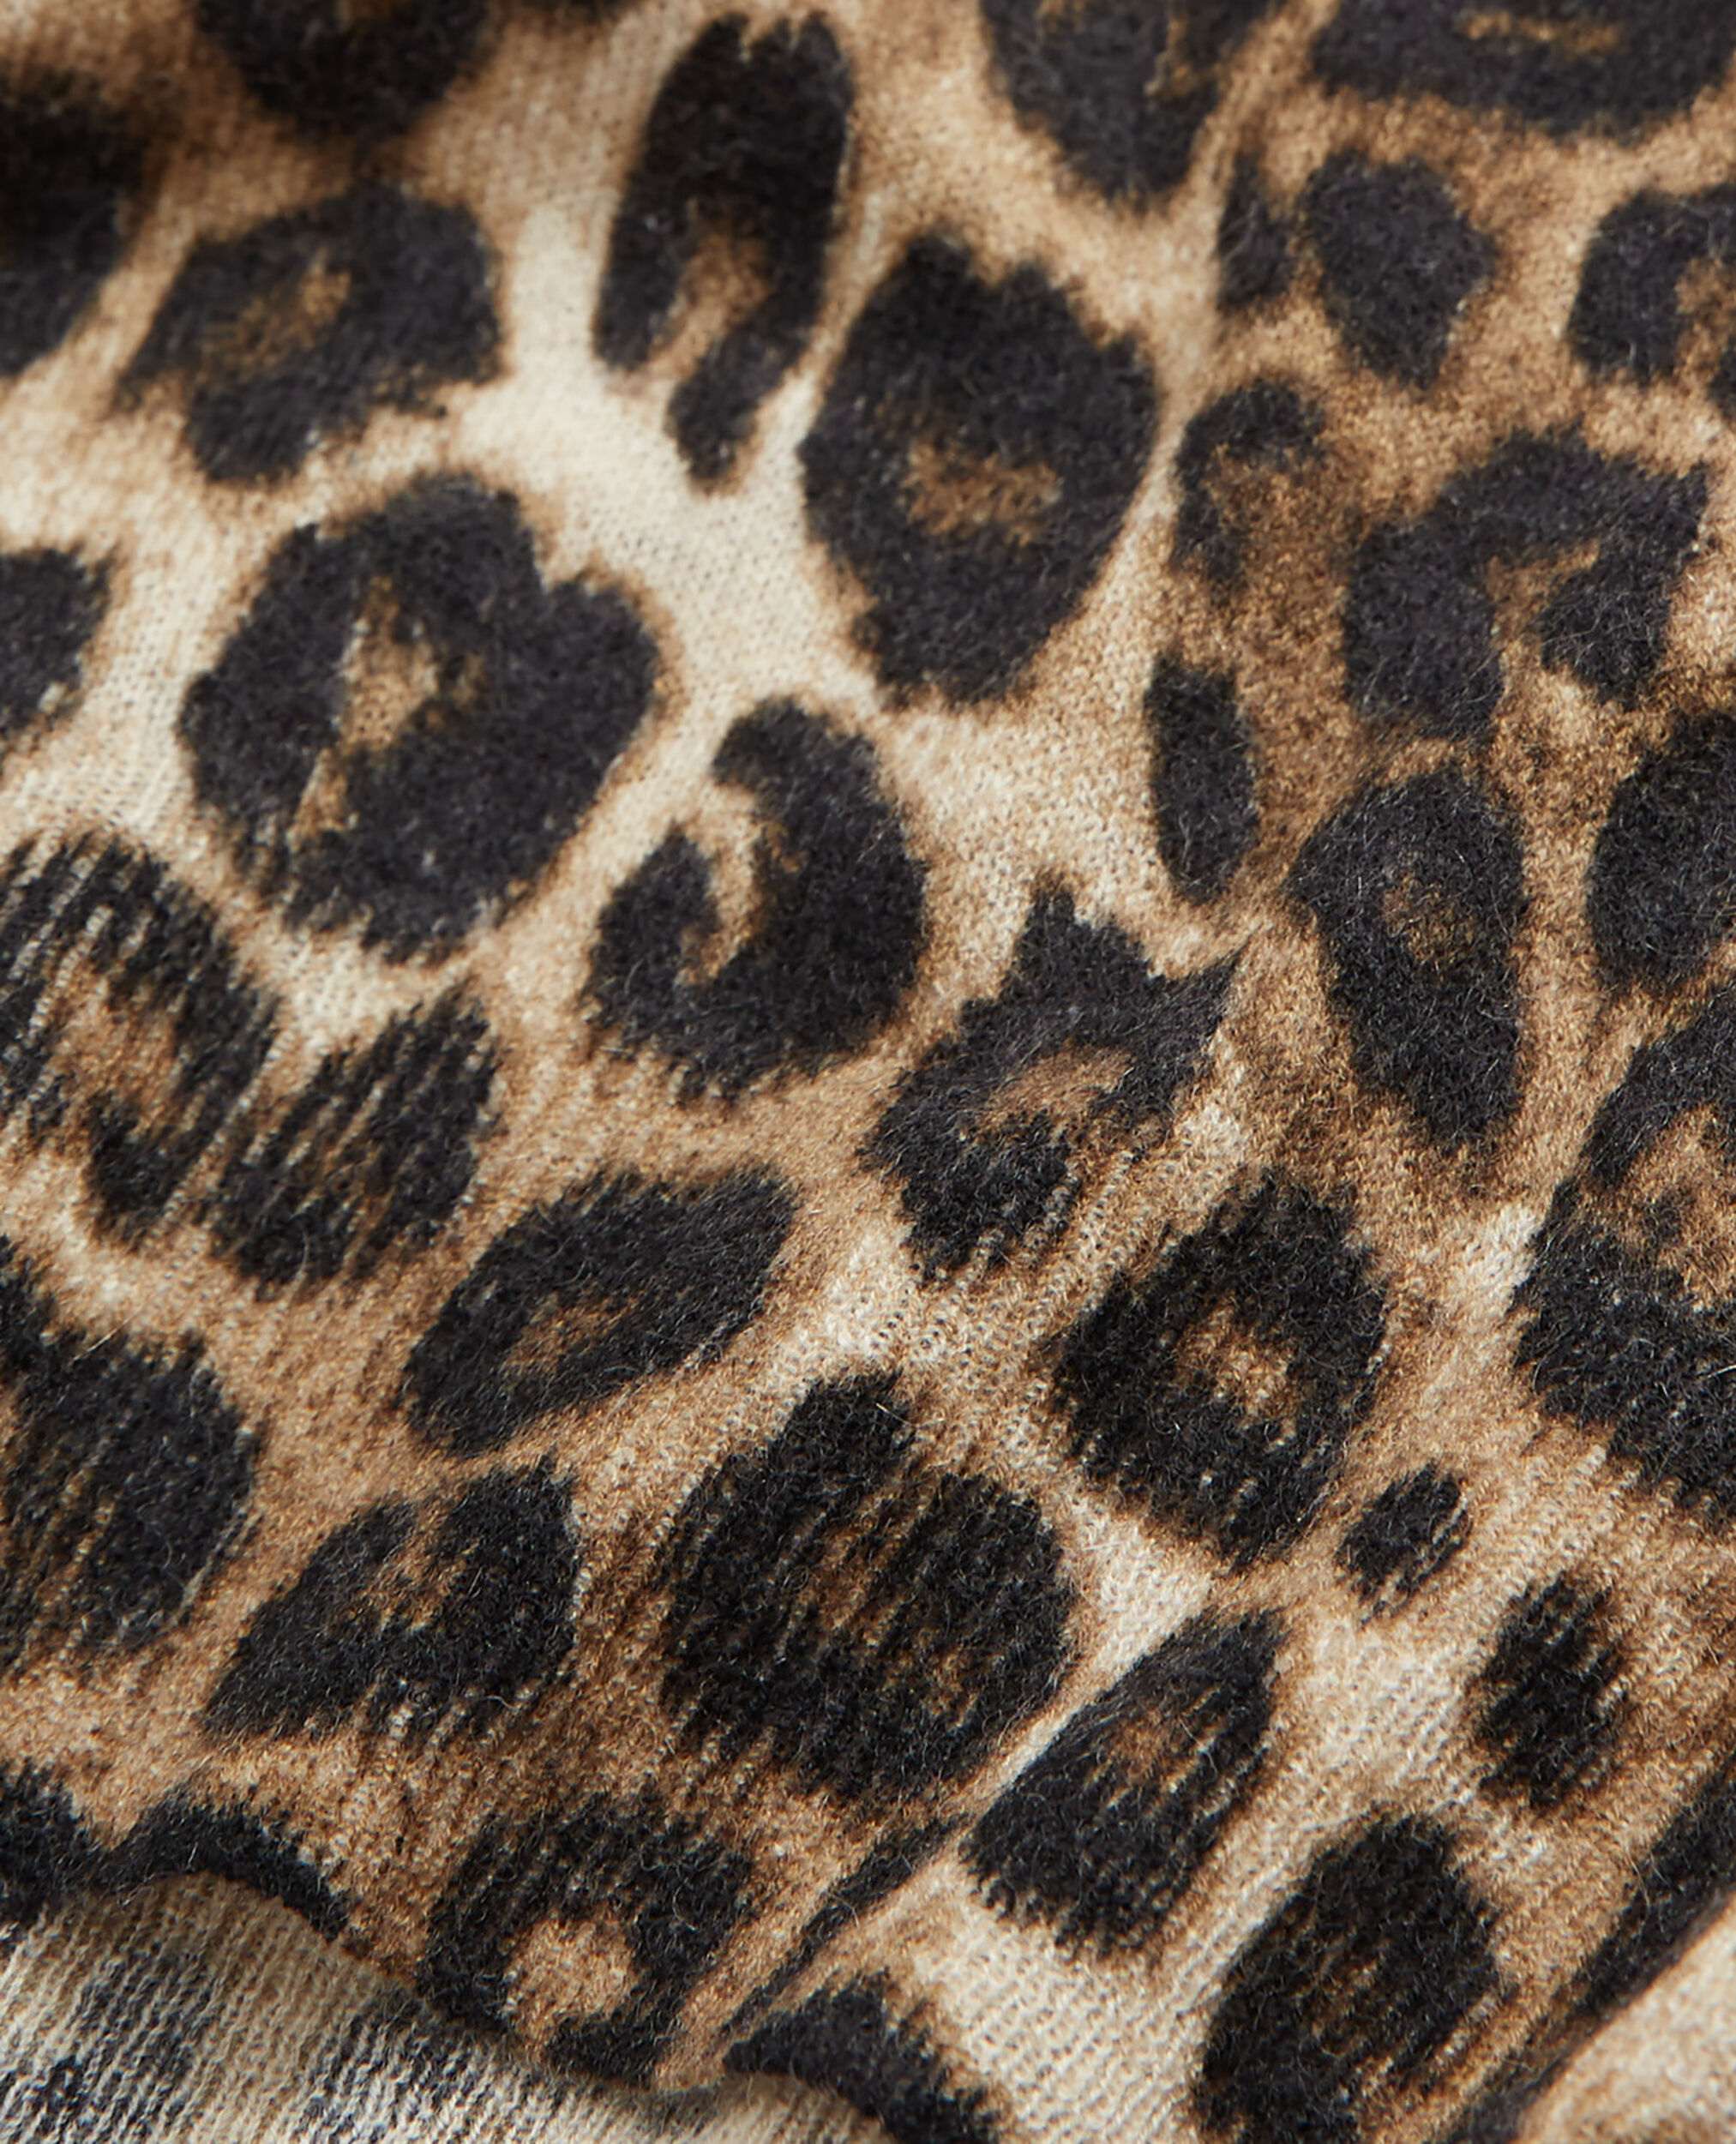 Jersey de cachemira leopardo, LEOPARD, hi-res image number null